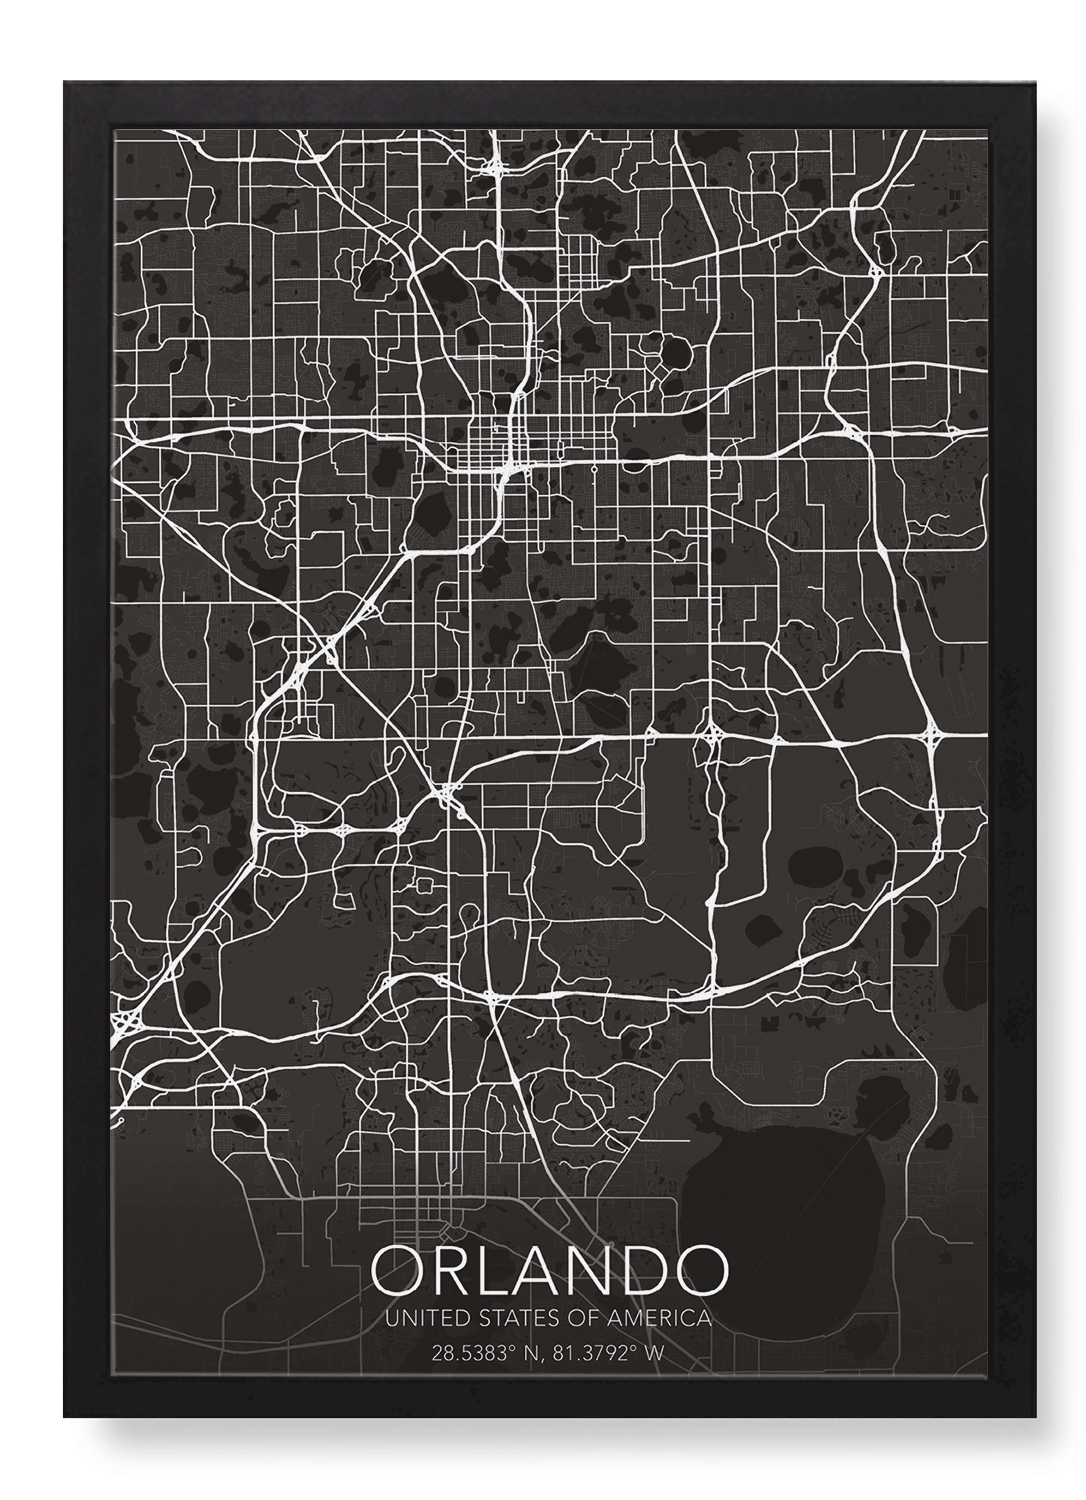 ORLANDO FULL MAP